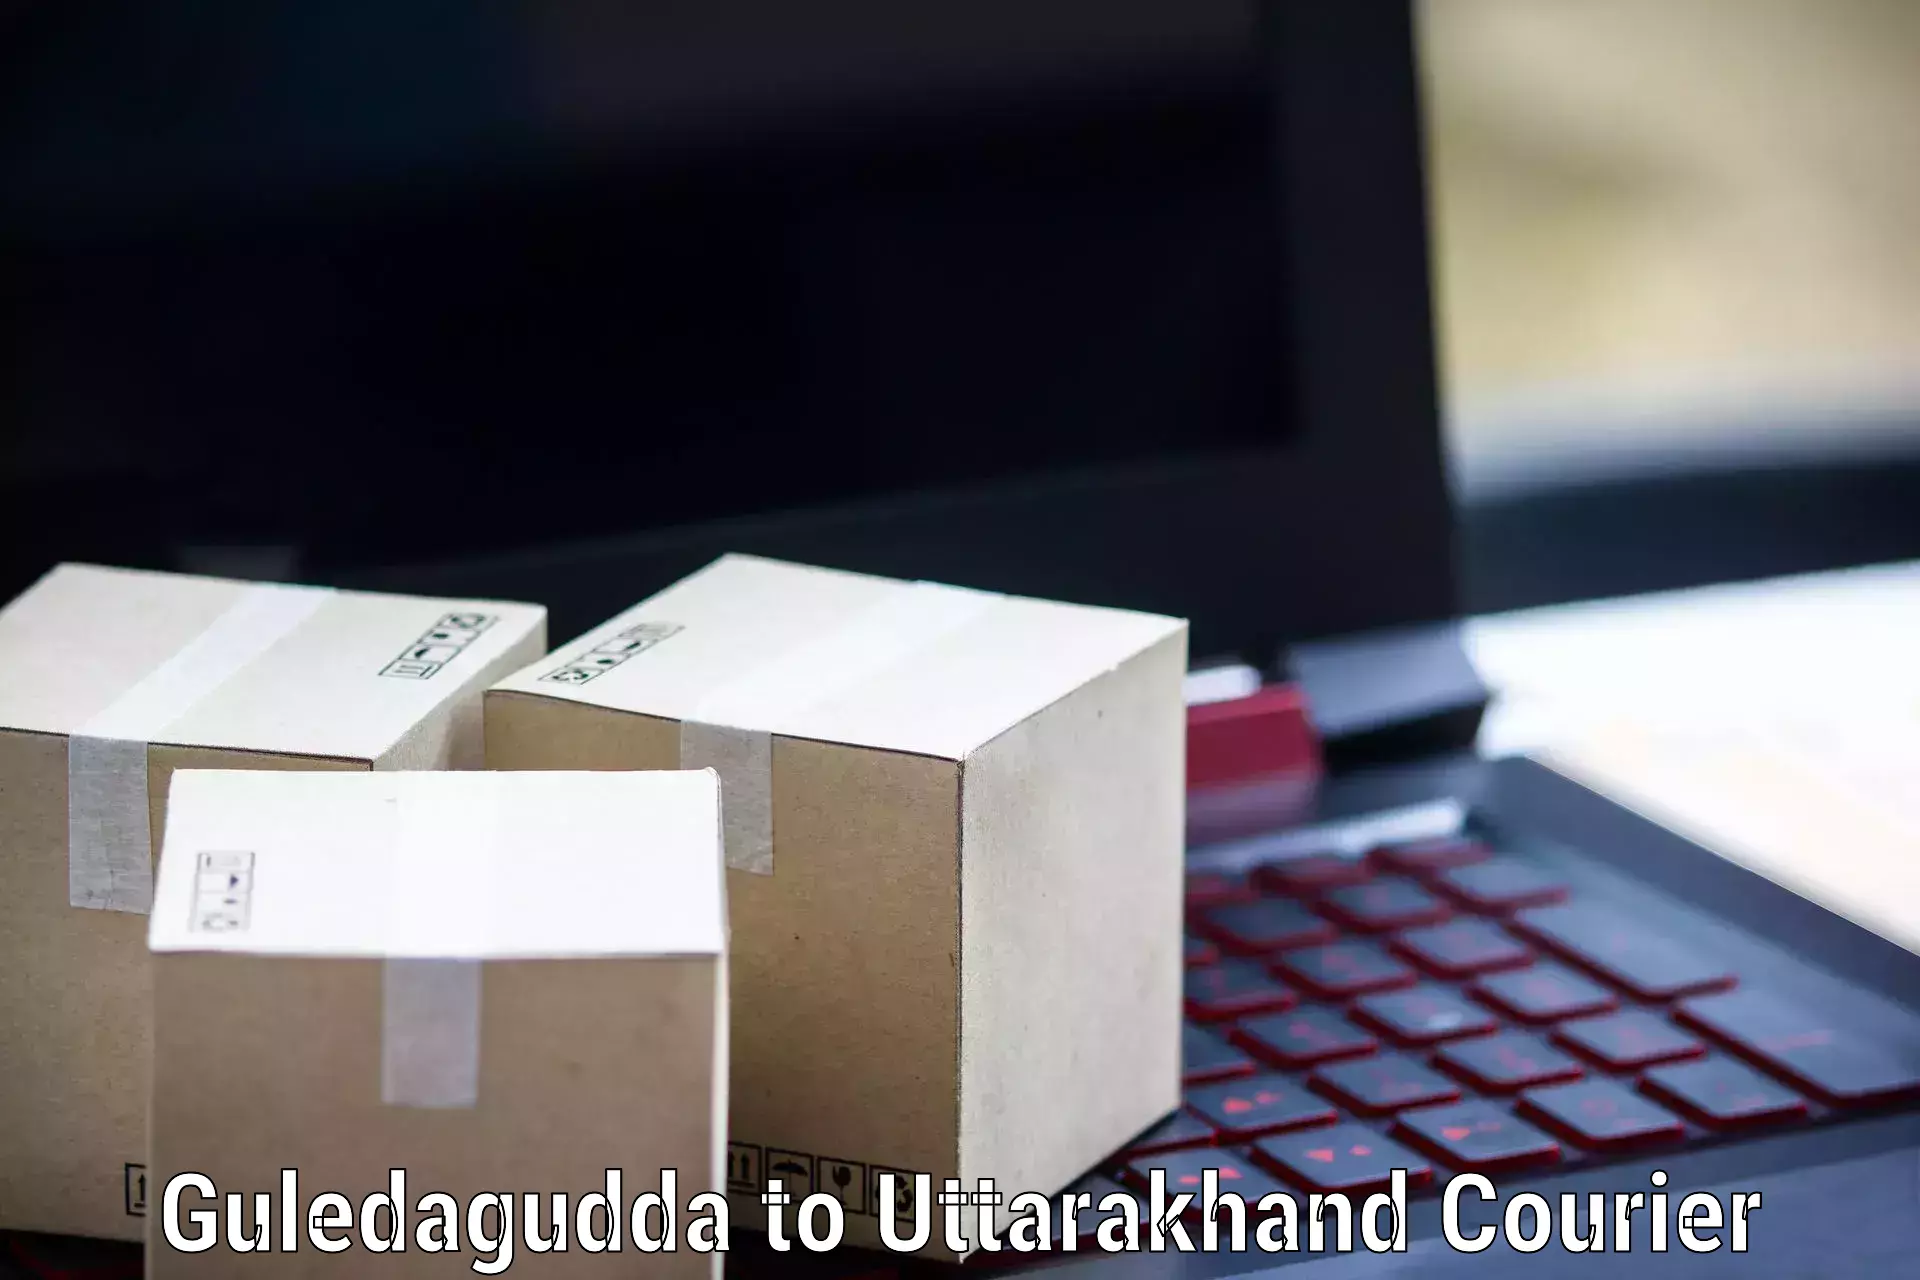 Advanced courier platforms Guledagudda to Rishikesh